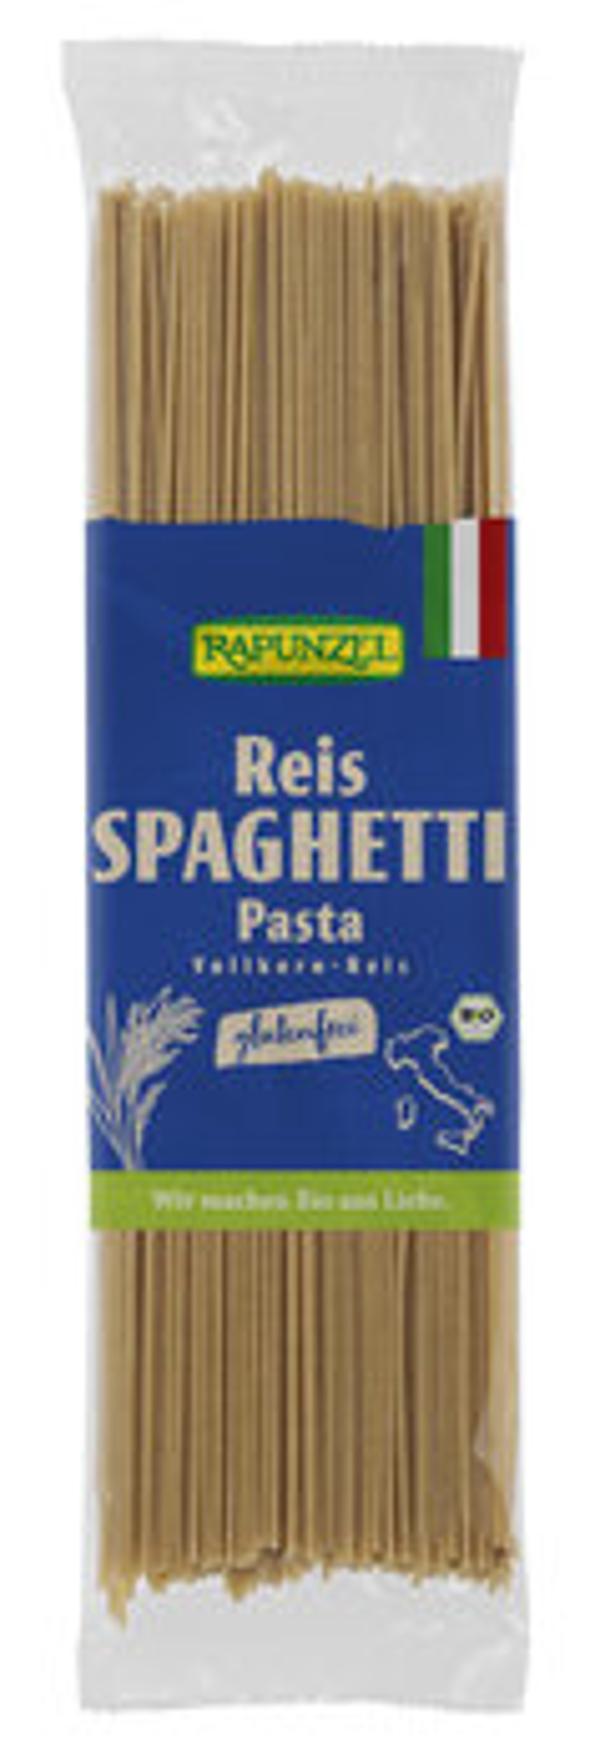 Produktfoto zu Reis-Spaghetti, 250 g